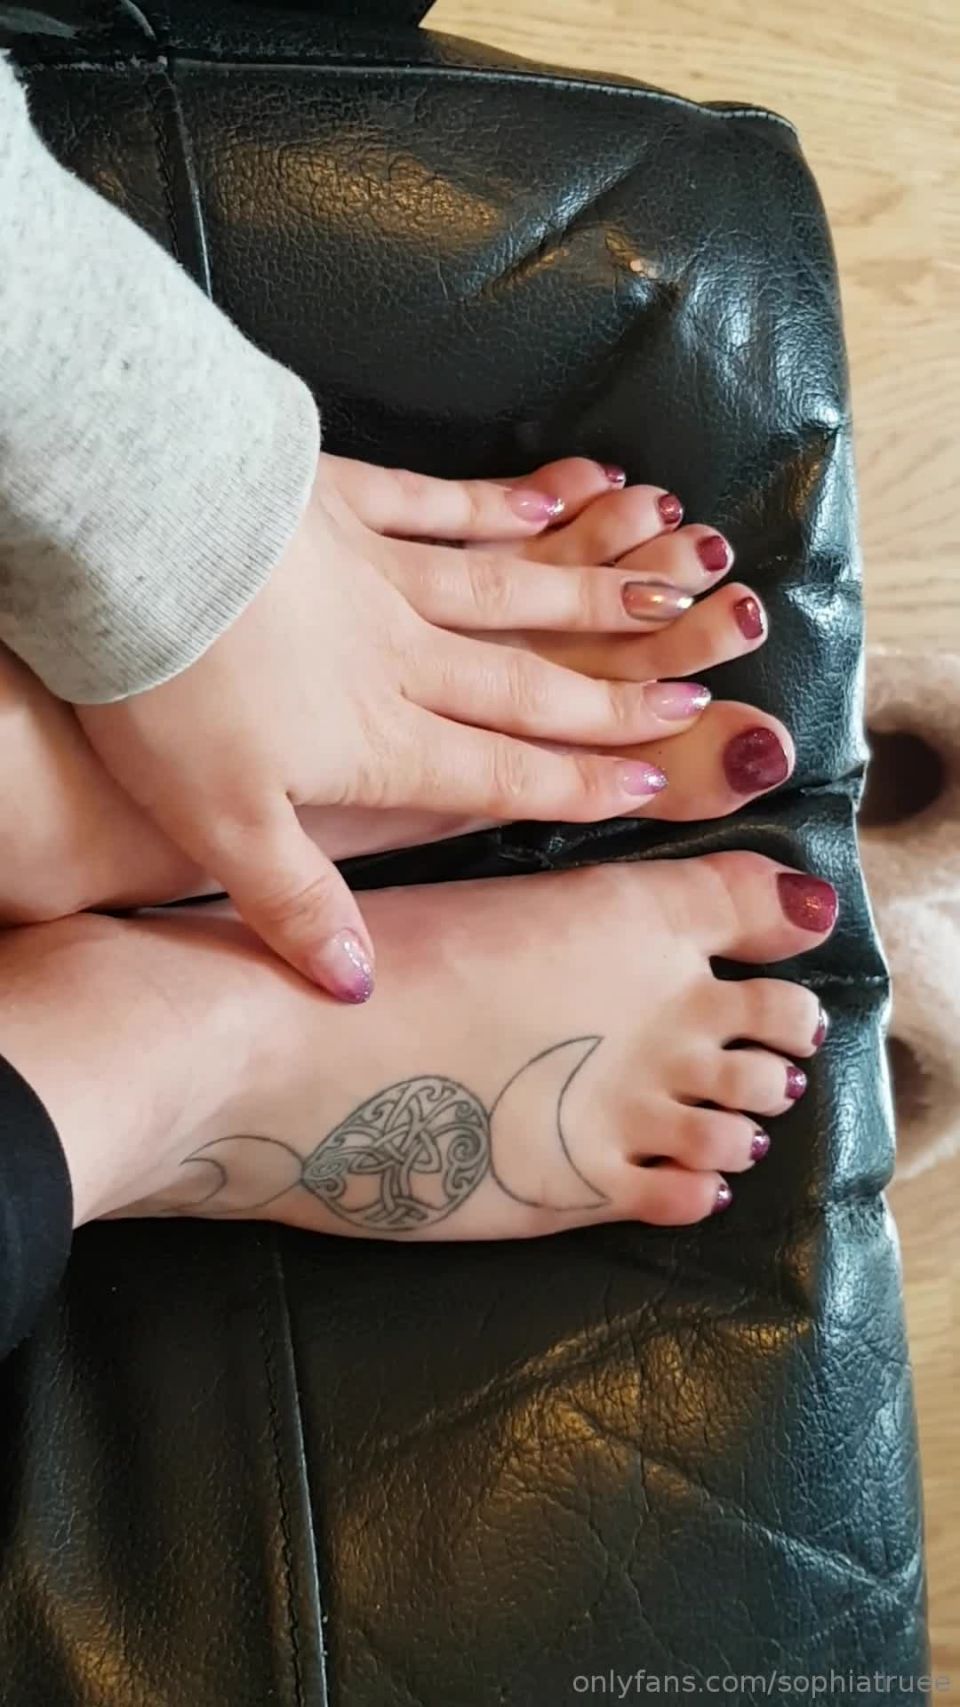 sophiatruee  Matching fingers toes footfetish feet footworship nailfetish findom finsub findomme paypig, femdom 69 on femdom porn 